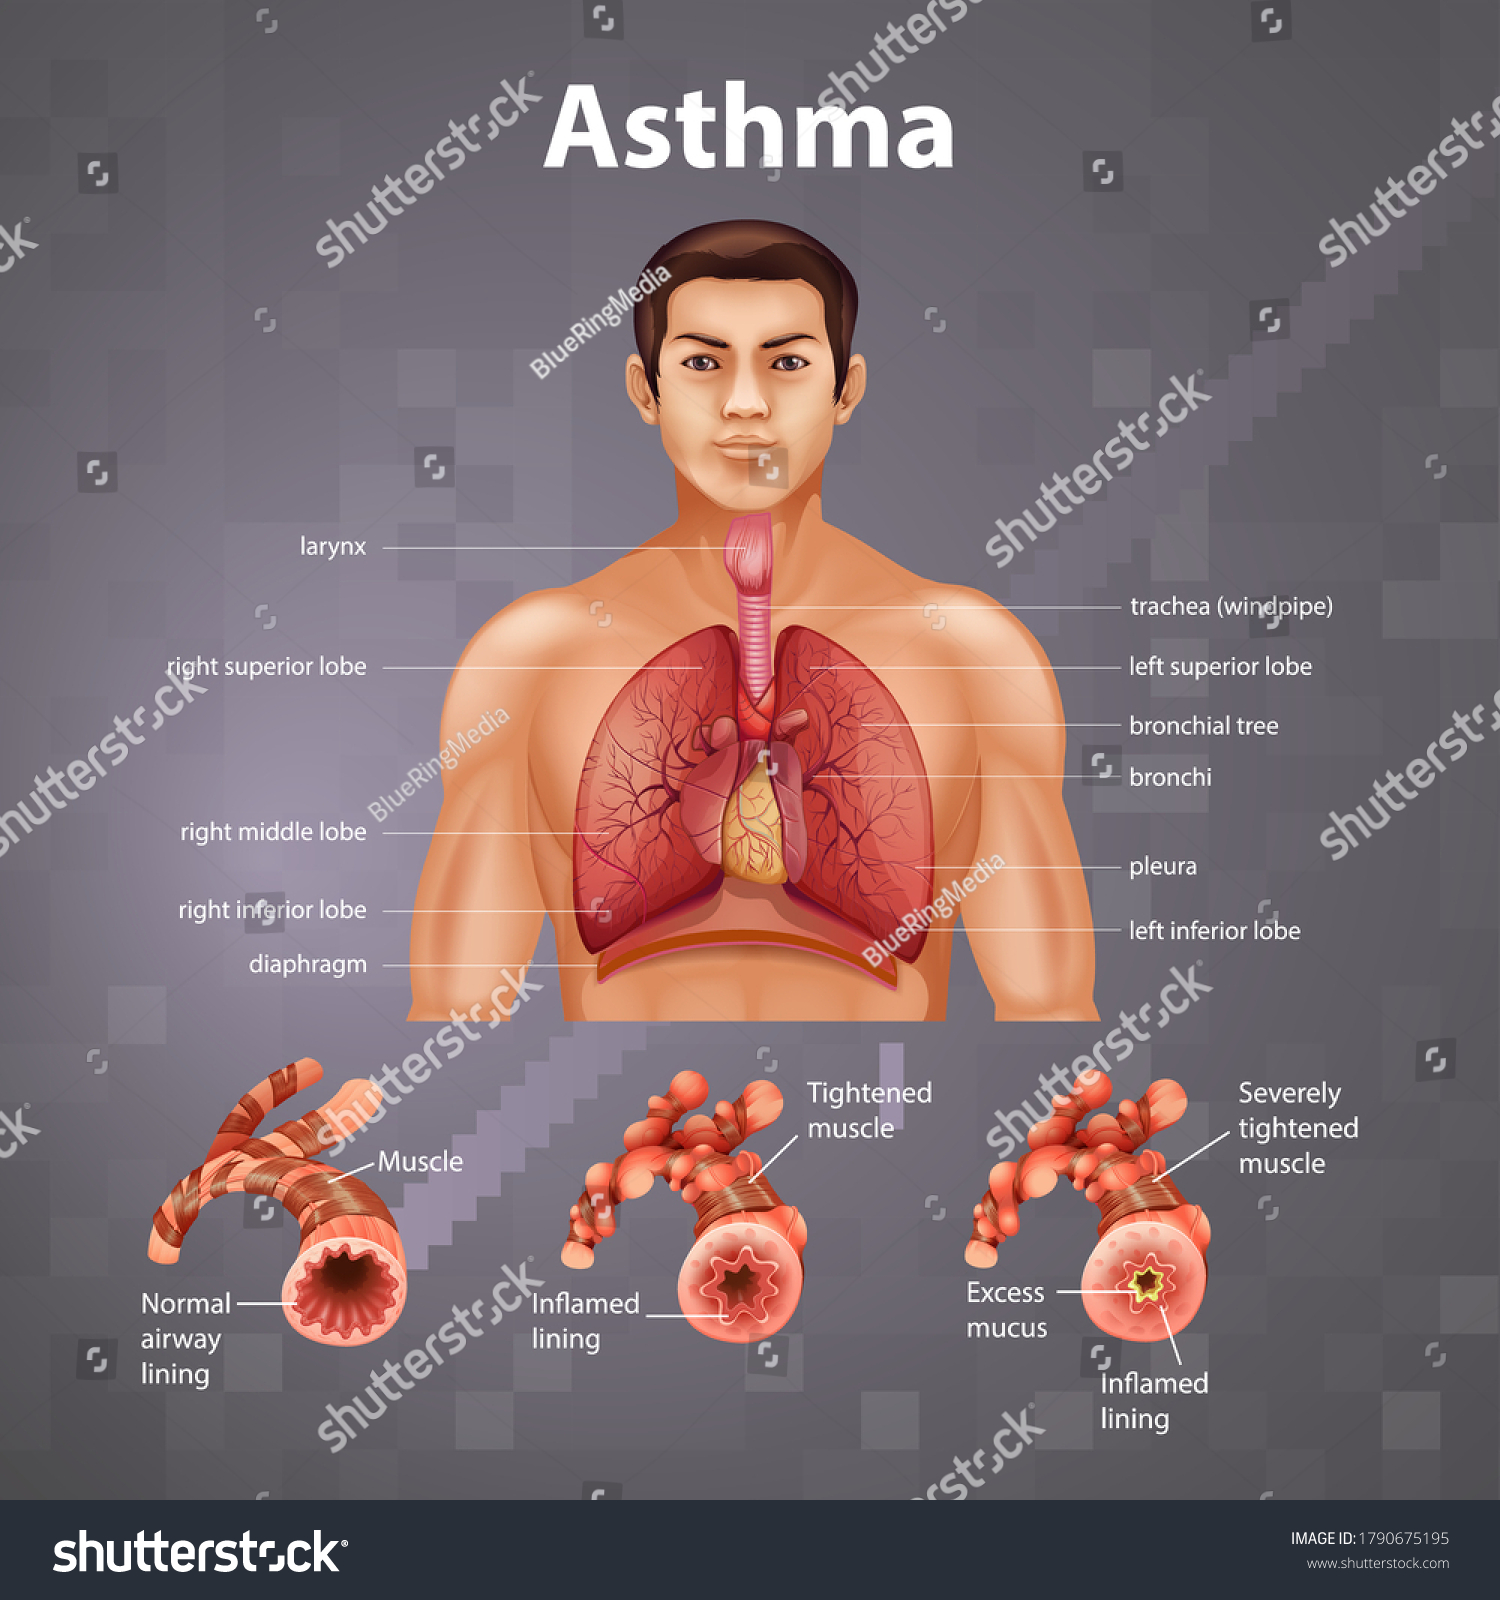 Human anatomy Asthma diagram illustration #1790675195